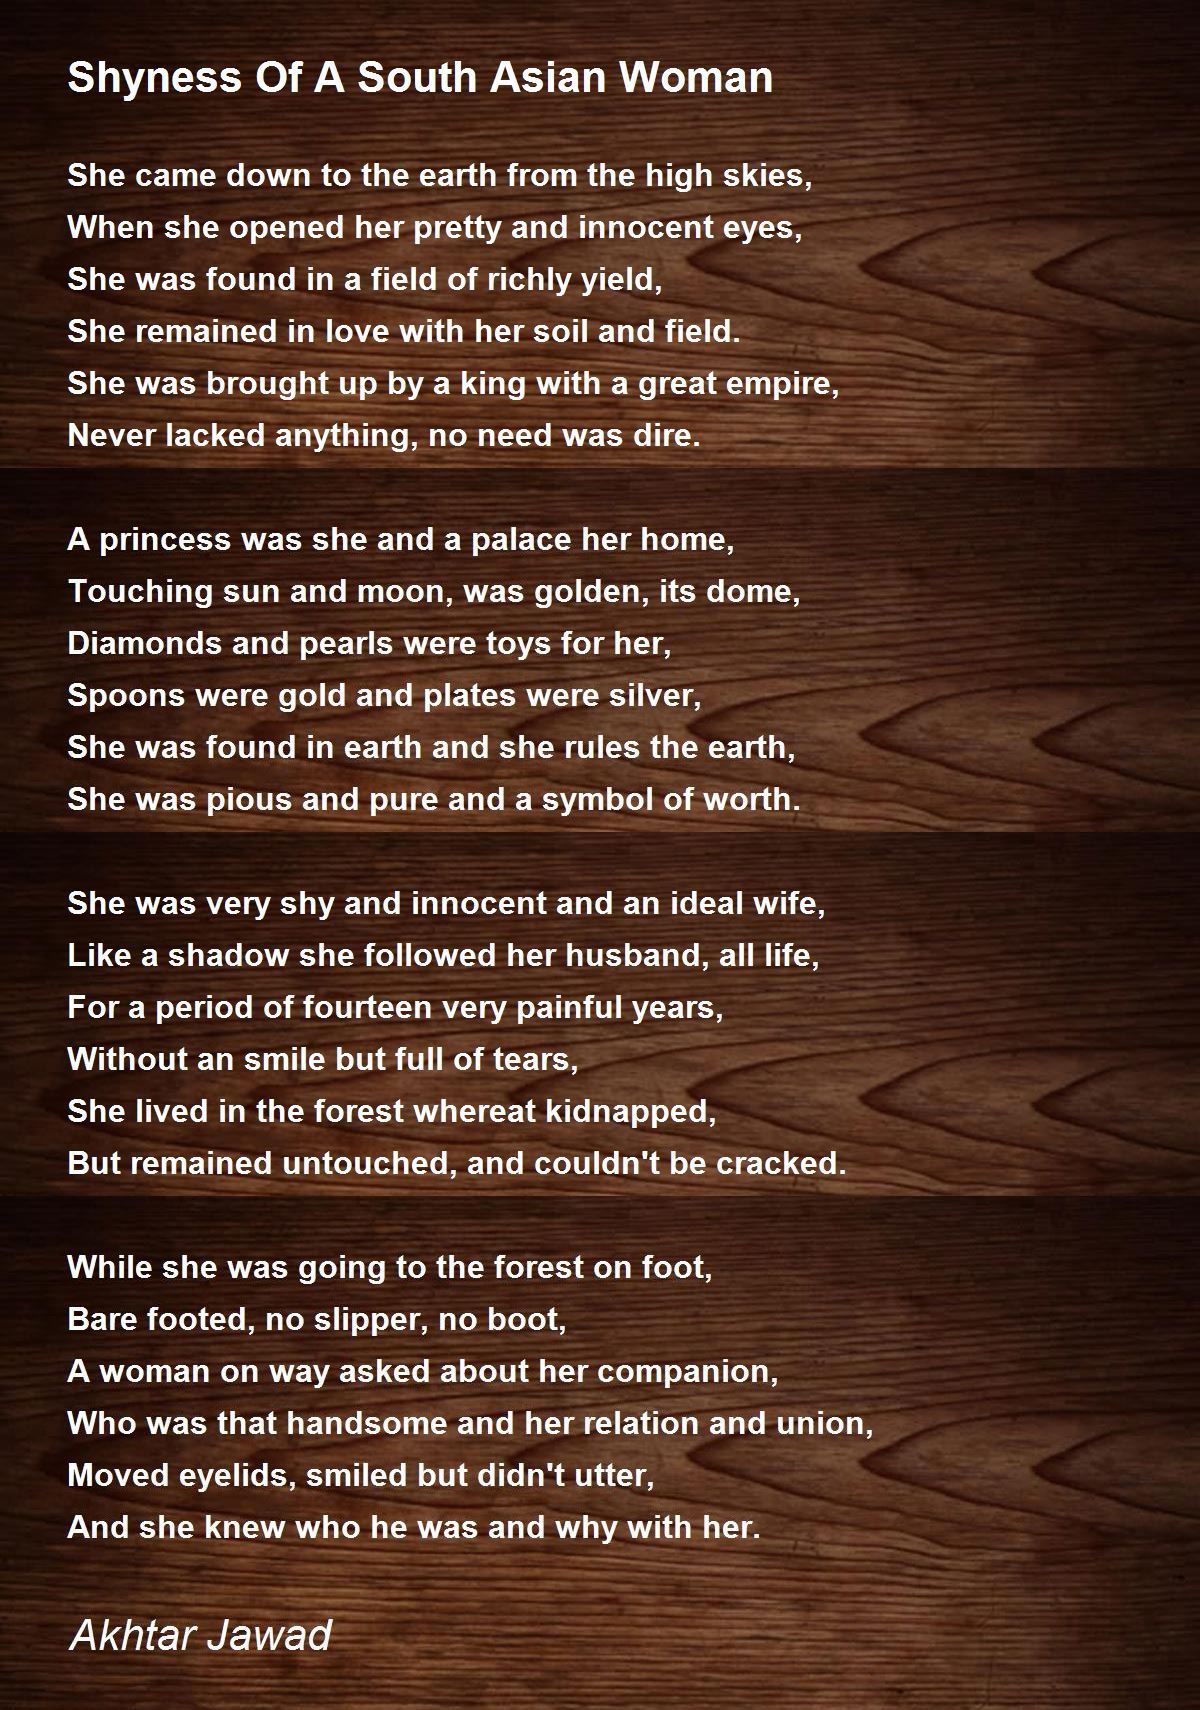 Shyness Of A South Asian Woman Poem by Akhtar Jawad - Poem Hunter